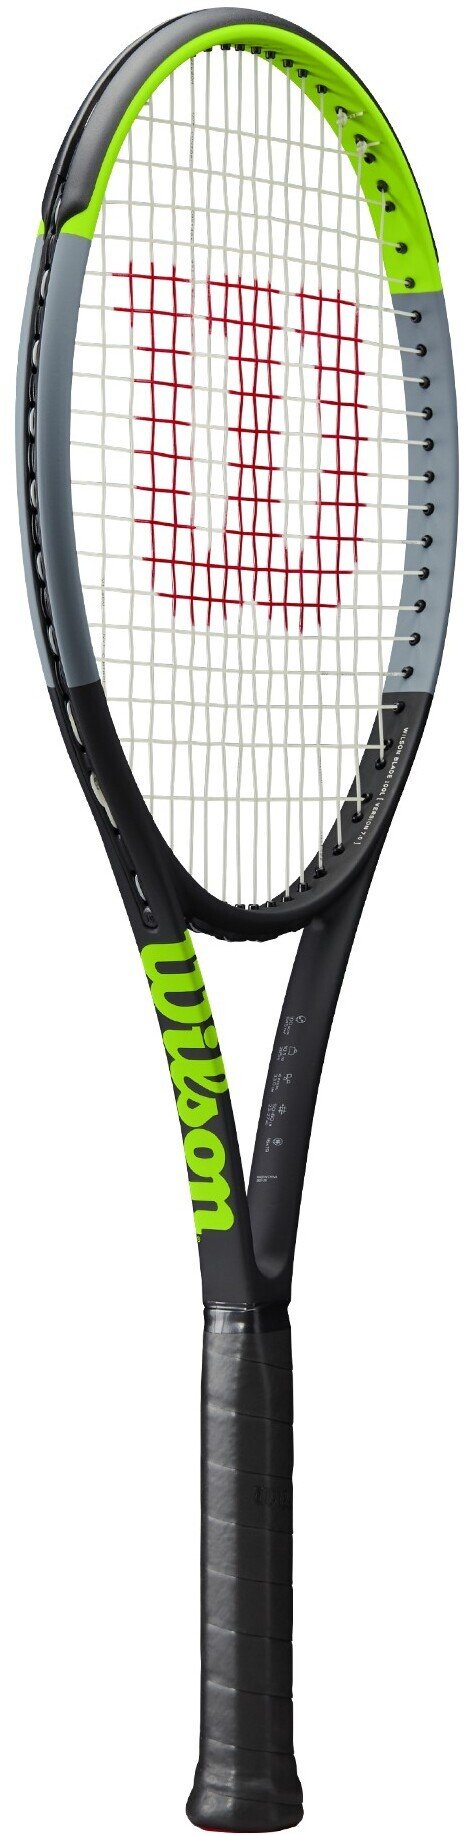 Wilson Blade 100L V7.0 Tennis Racquet - Black/Green